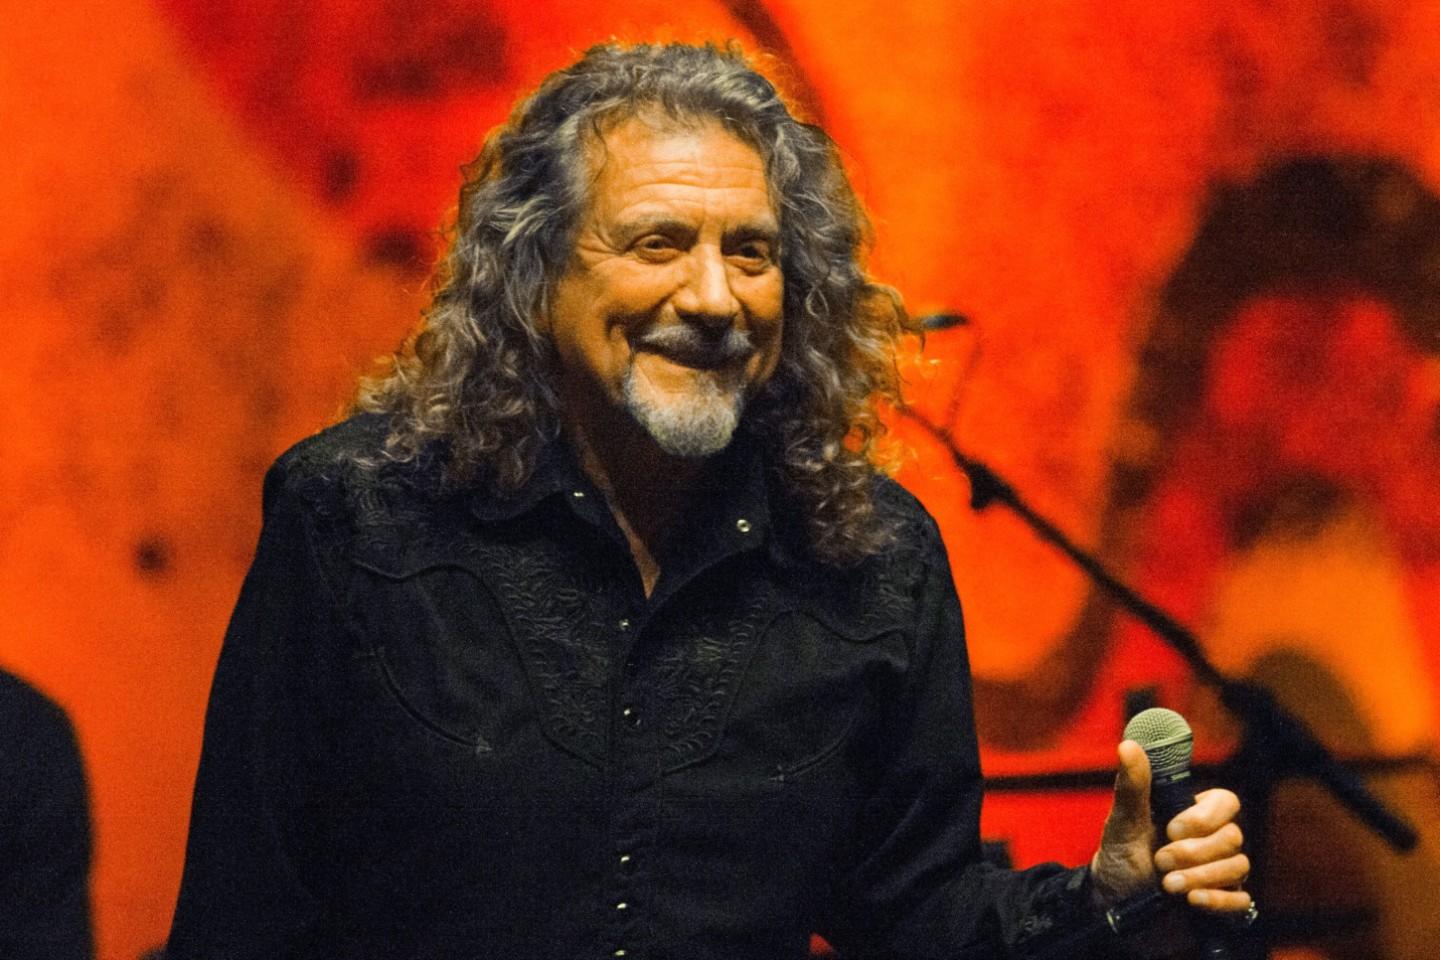 Robert Plant Tickets Robert Plant Concert Tickets and 2022 Tour Dates